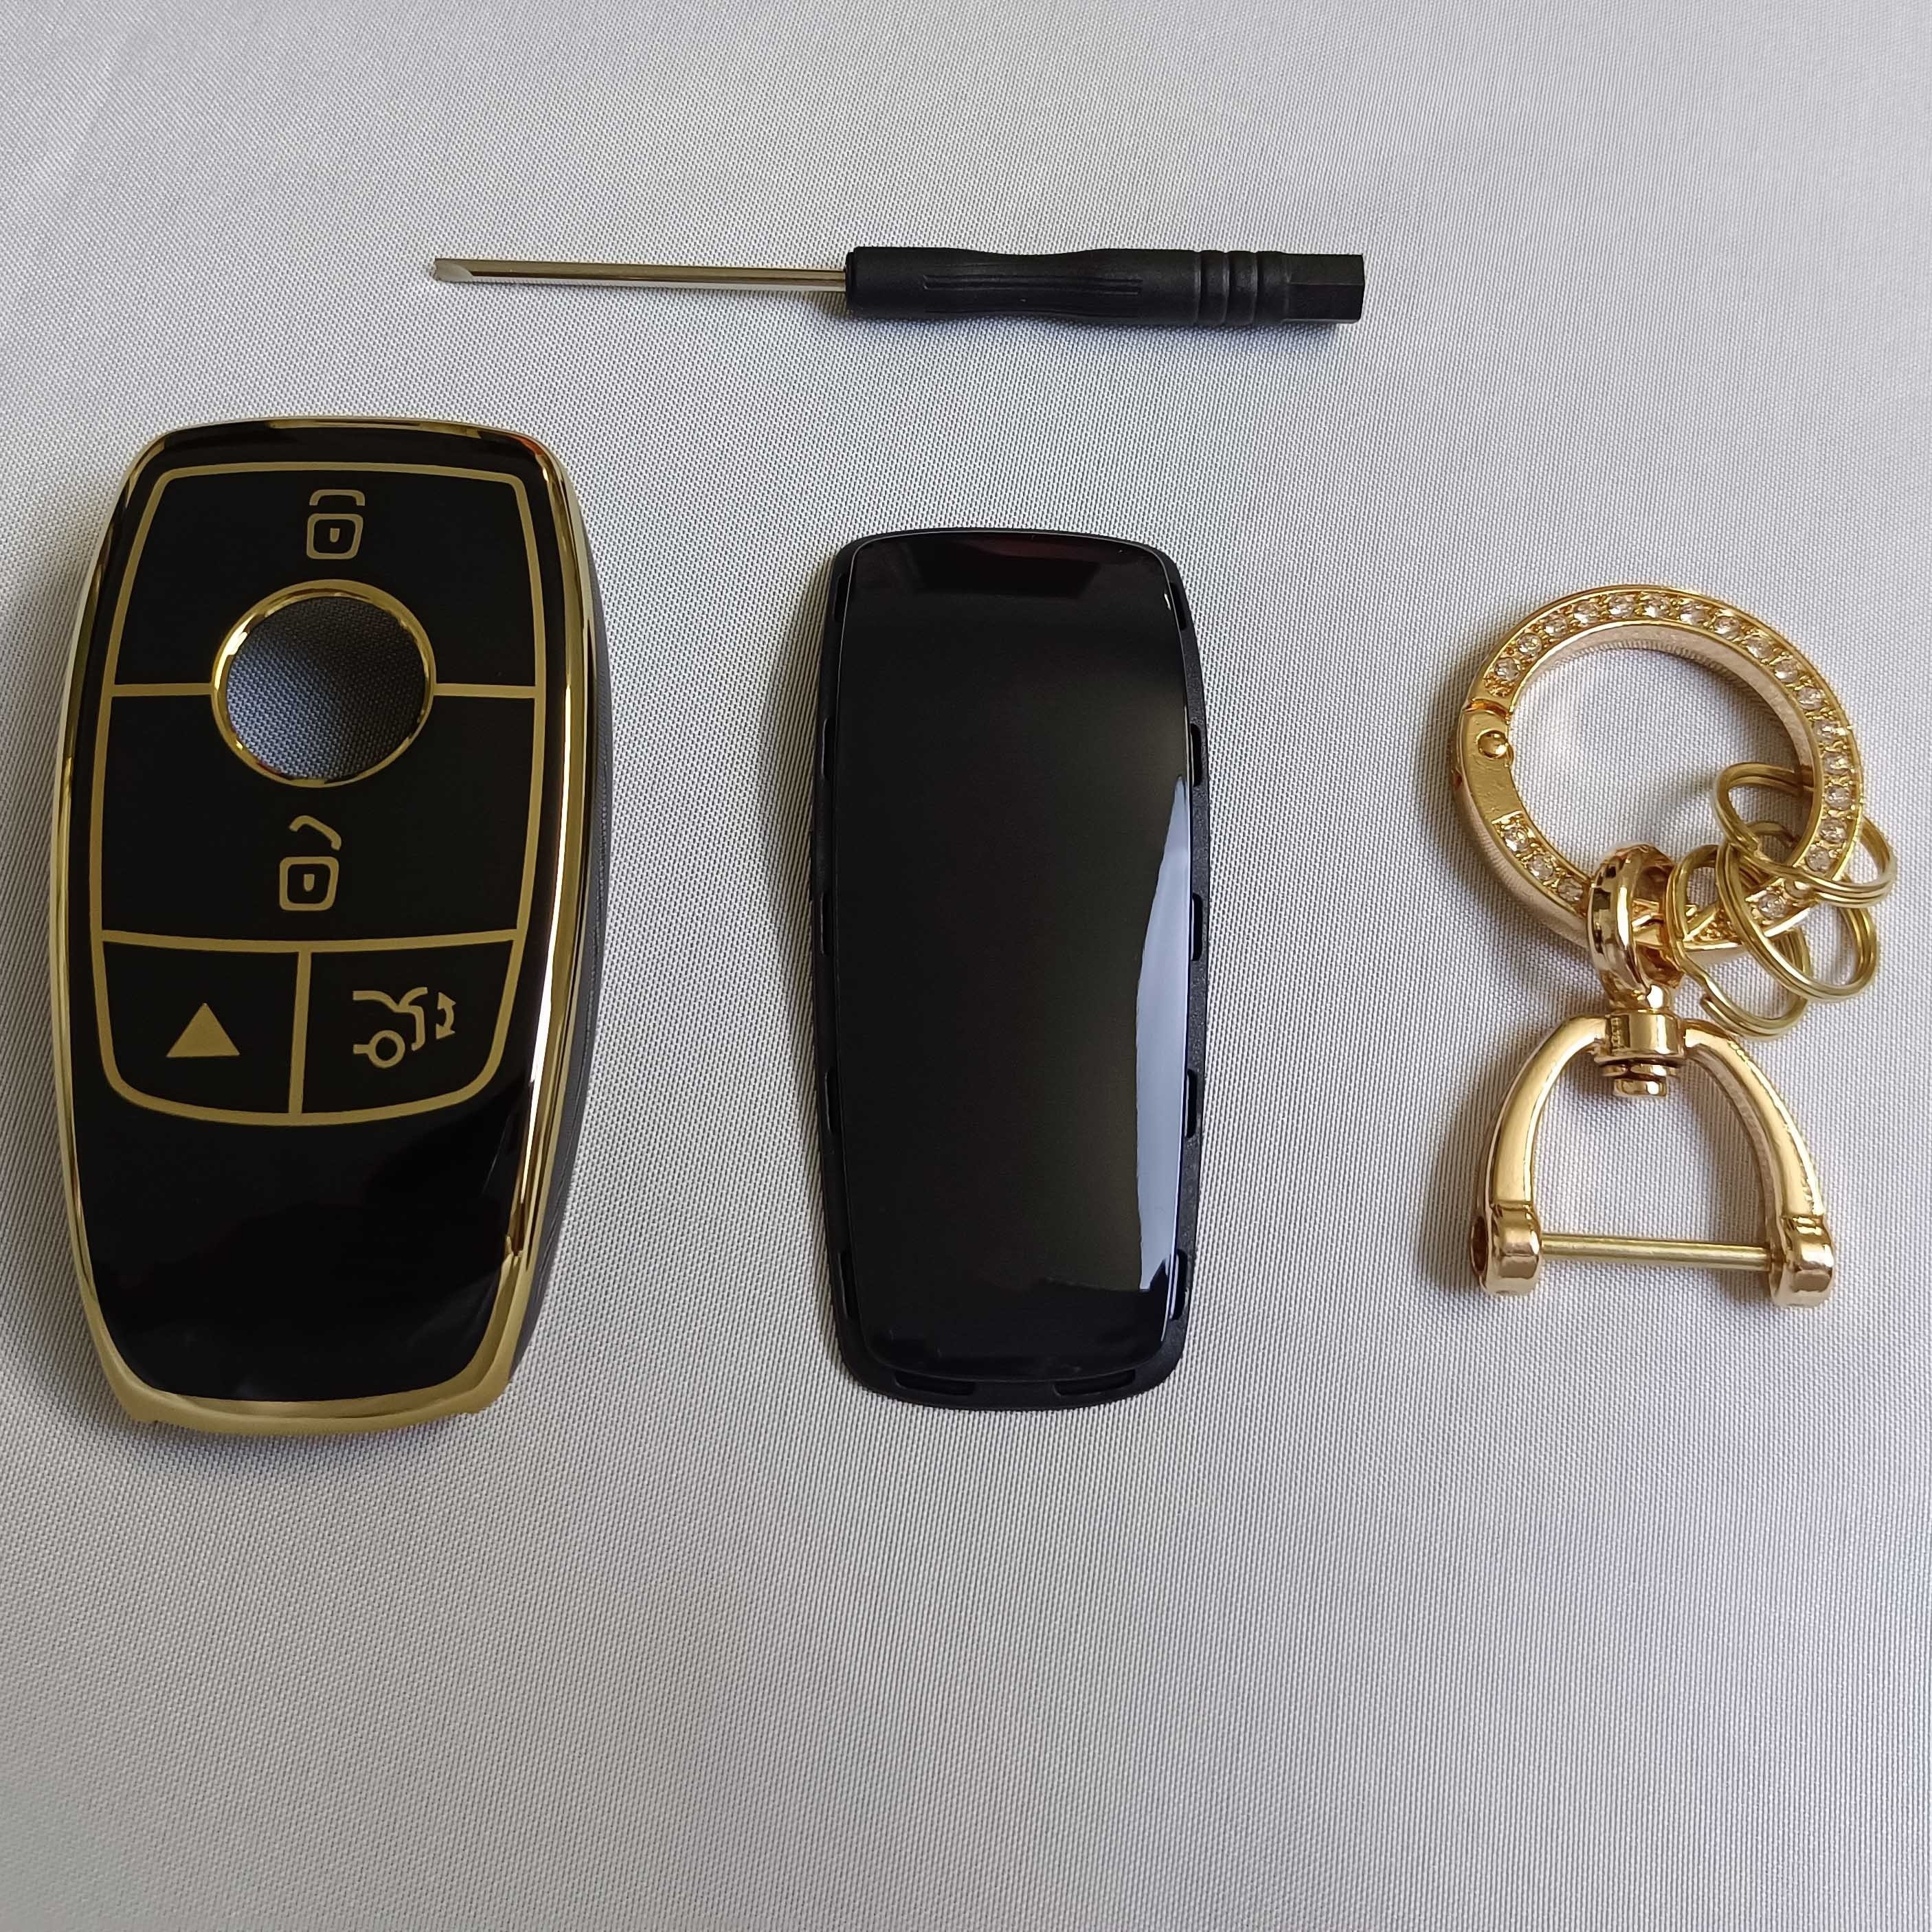 Porte-clés Mercedes - Objetdecom